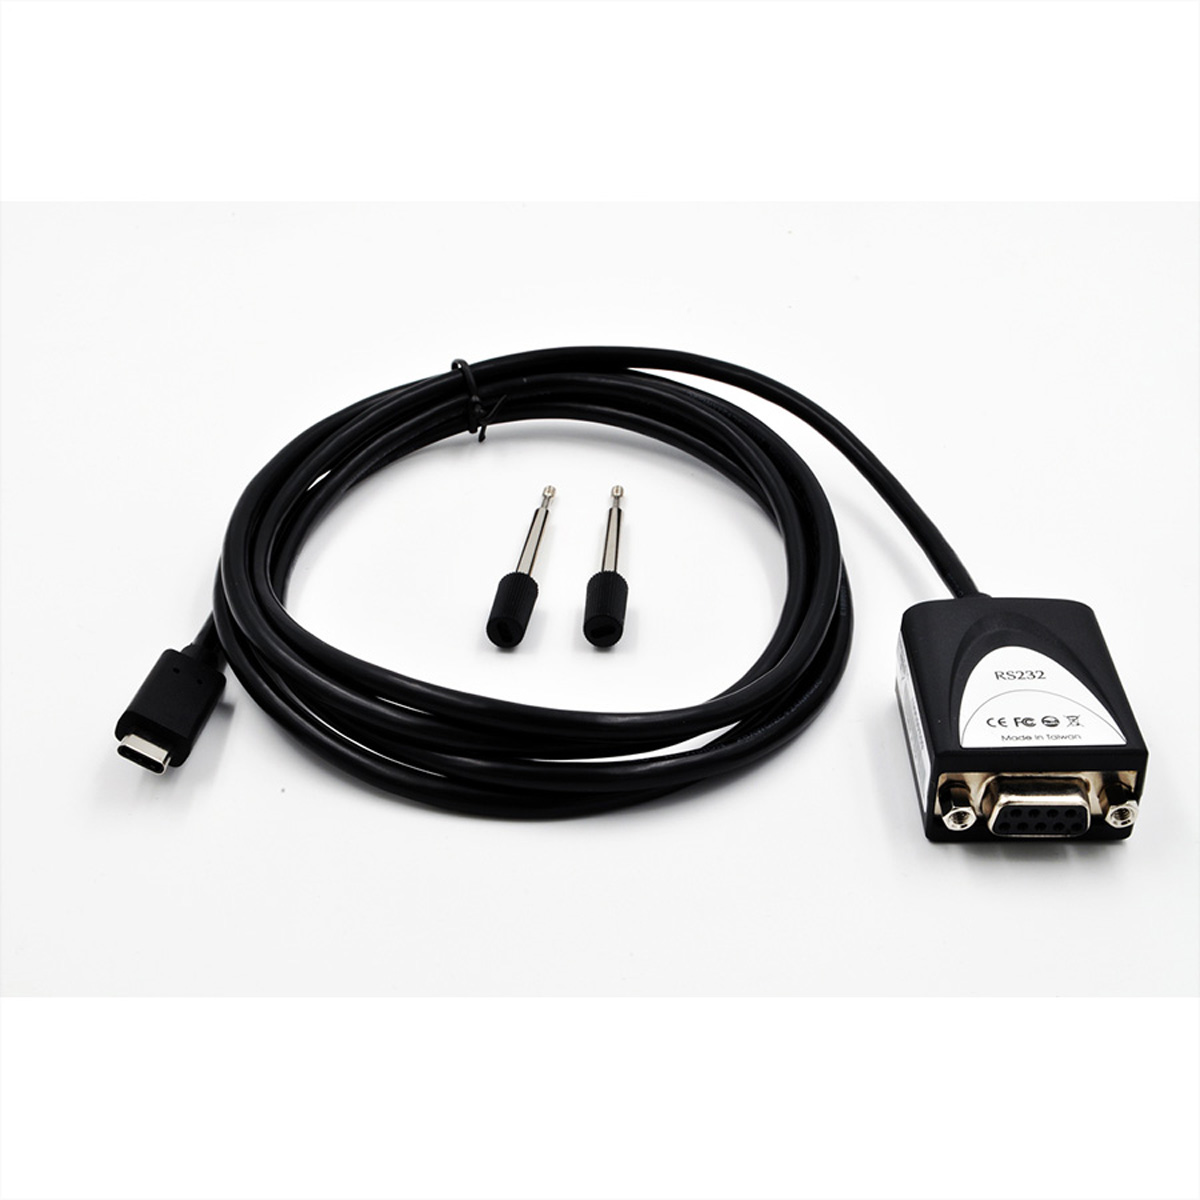 EXSYS EX-2311-2F USB 2.0 C - Stecker zu 1 x Seriell RS-232 1.8 Meter Kabel mit 9 Pin Buchse LED Anzeige